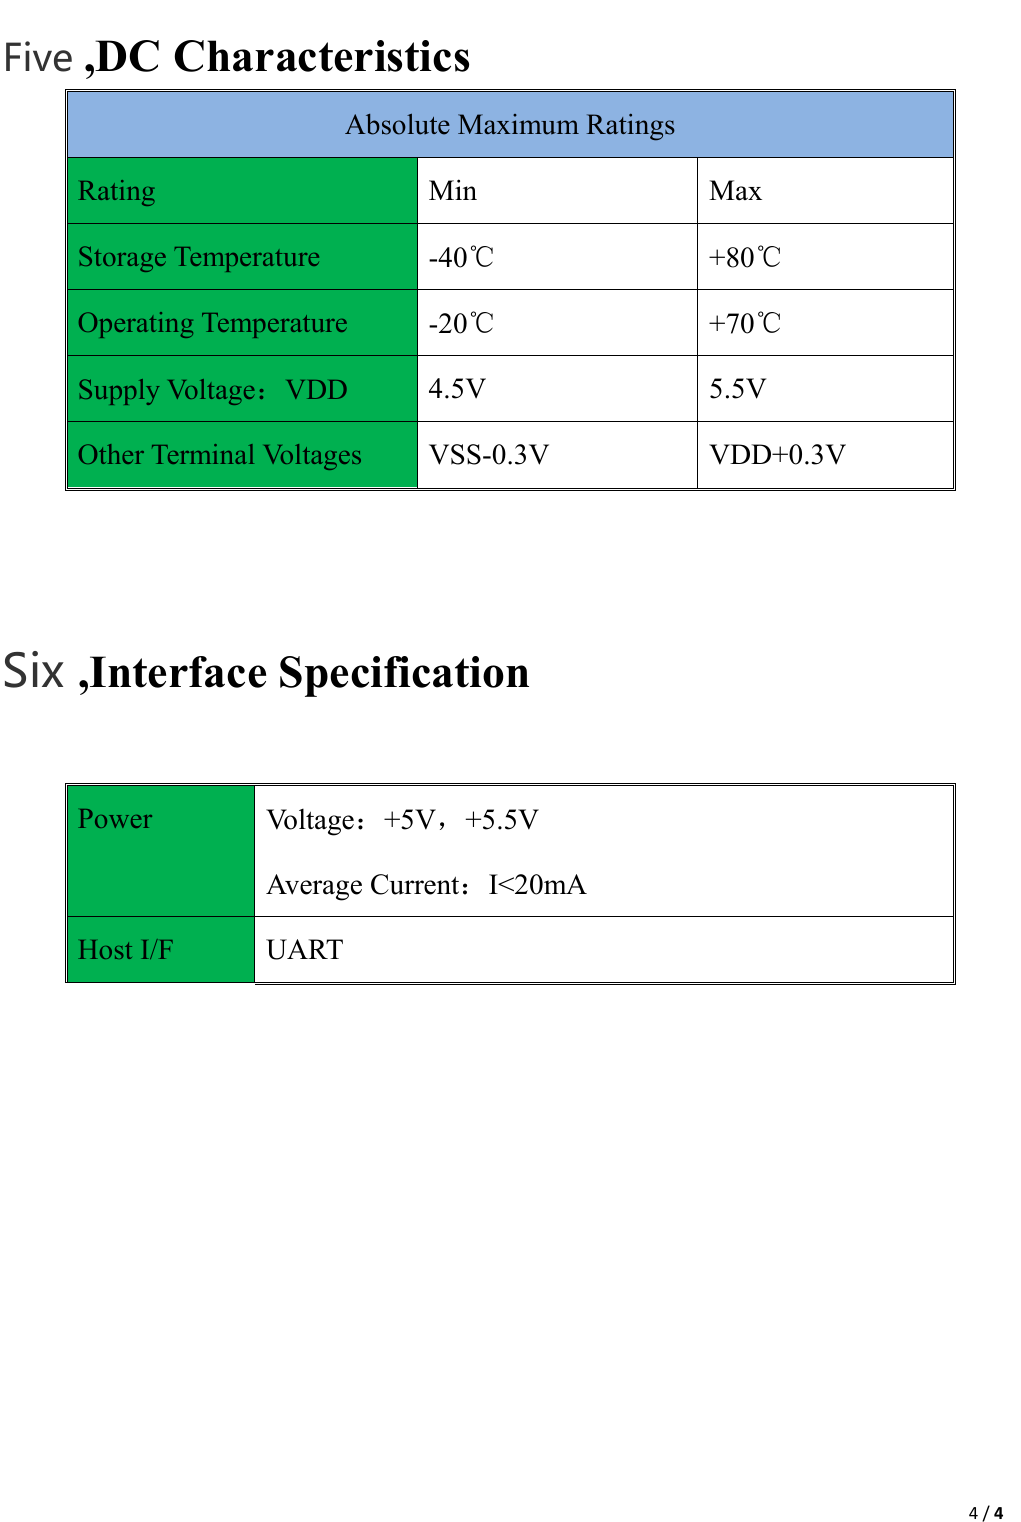                                                                                                                                                                                                                                         4 / 4                                                                                 Five ,DC Characteristics Absolute Maximum Ratings Rating Min Max Storage Temperature -40℃   +80℃ Operating Temperature -20℃ +70℃ Supply Voltage：VDD 4.5V 5.5V Other Terminal Voltages VSS-0.3V VDD+0.3V   Six ,Interface Specification  Power Voltage：+5V，+5.5V Average Current：I&lt;20mA Host I/F UART    